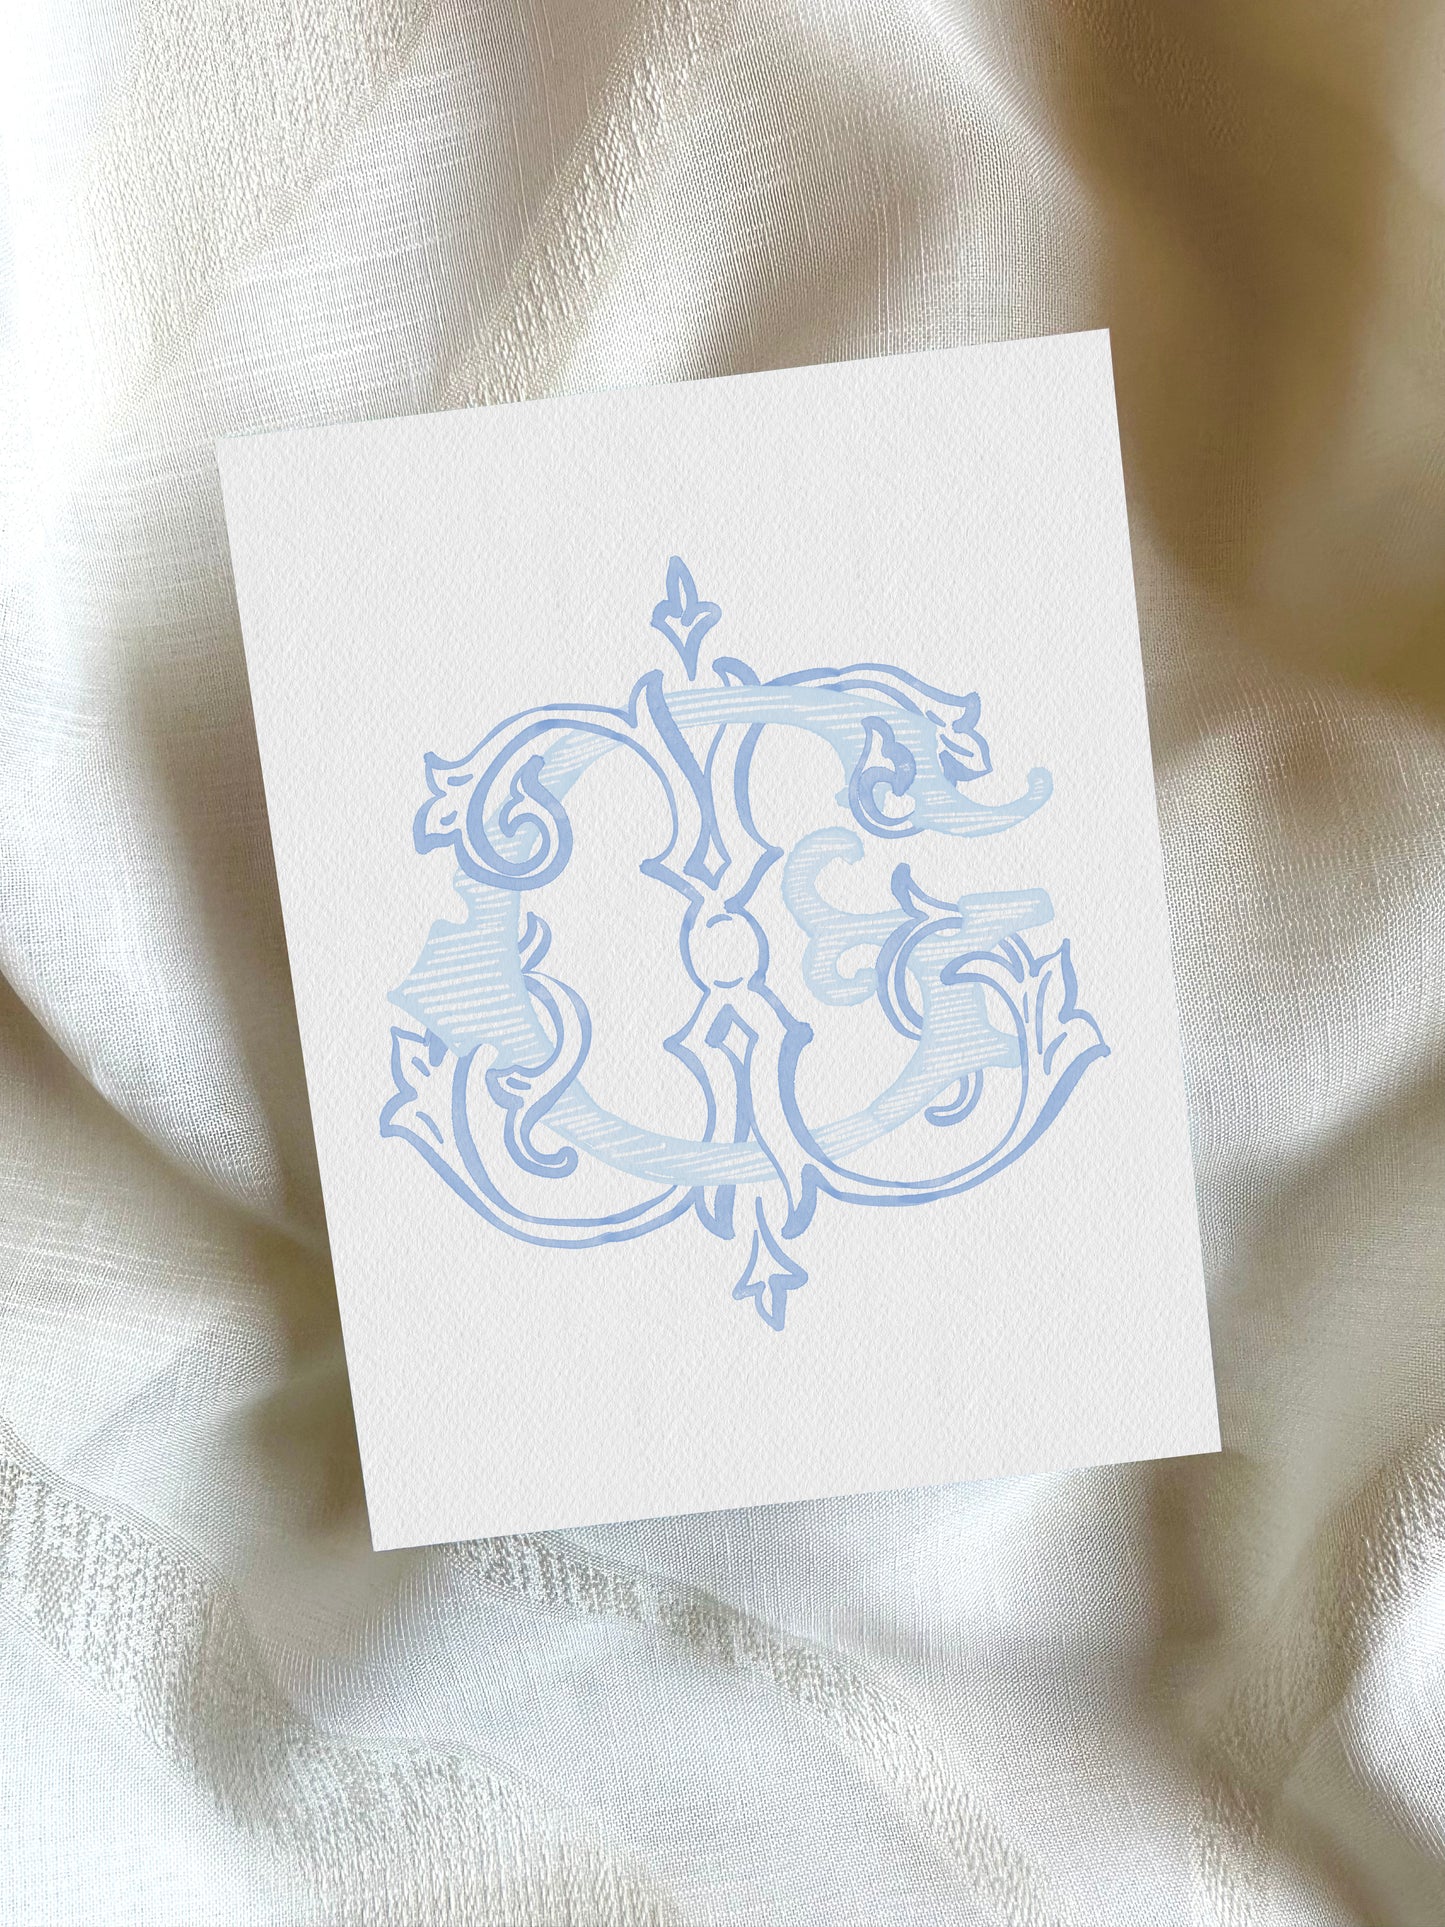 2 Letter Monogram with Letters GX XG | Digital Download - Wedding Monogram SVG, Personal Logo, Wedding Logo for Wedding Invitations The Wedding Crest Lab